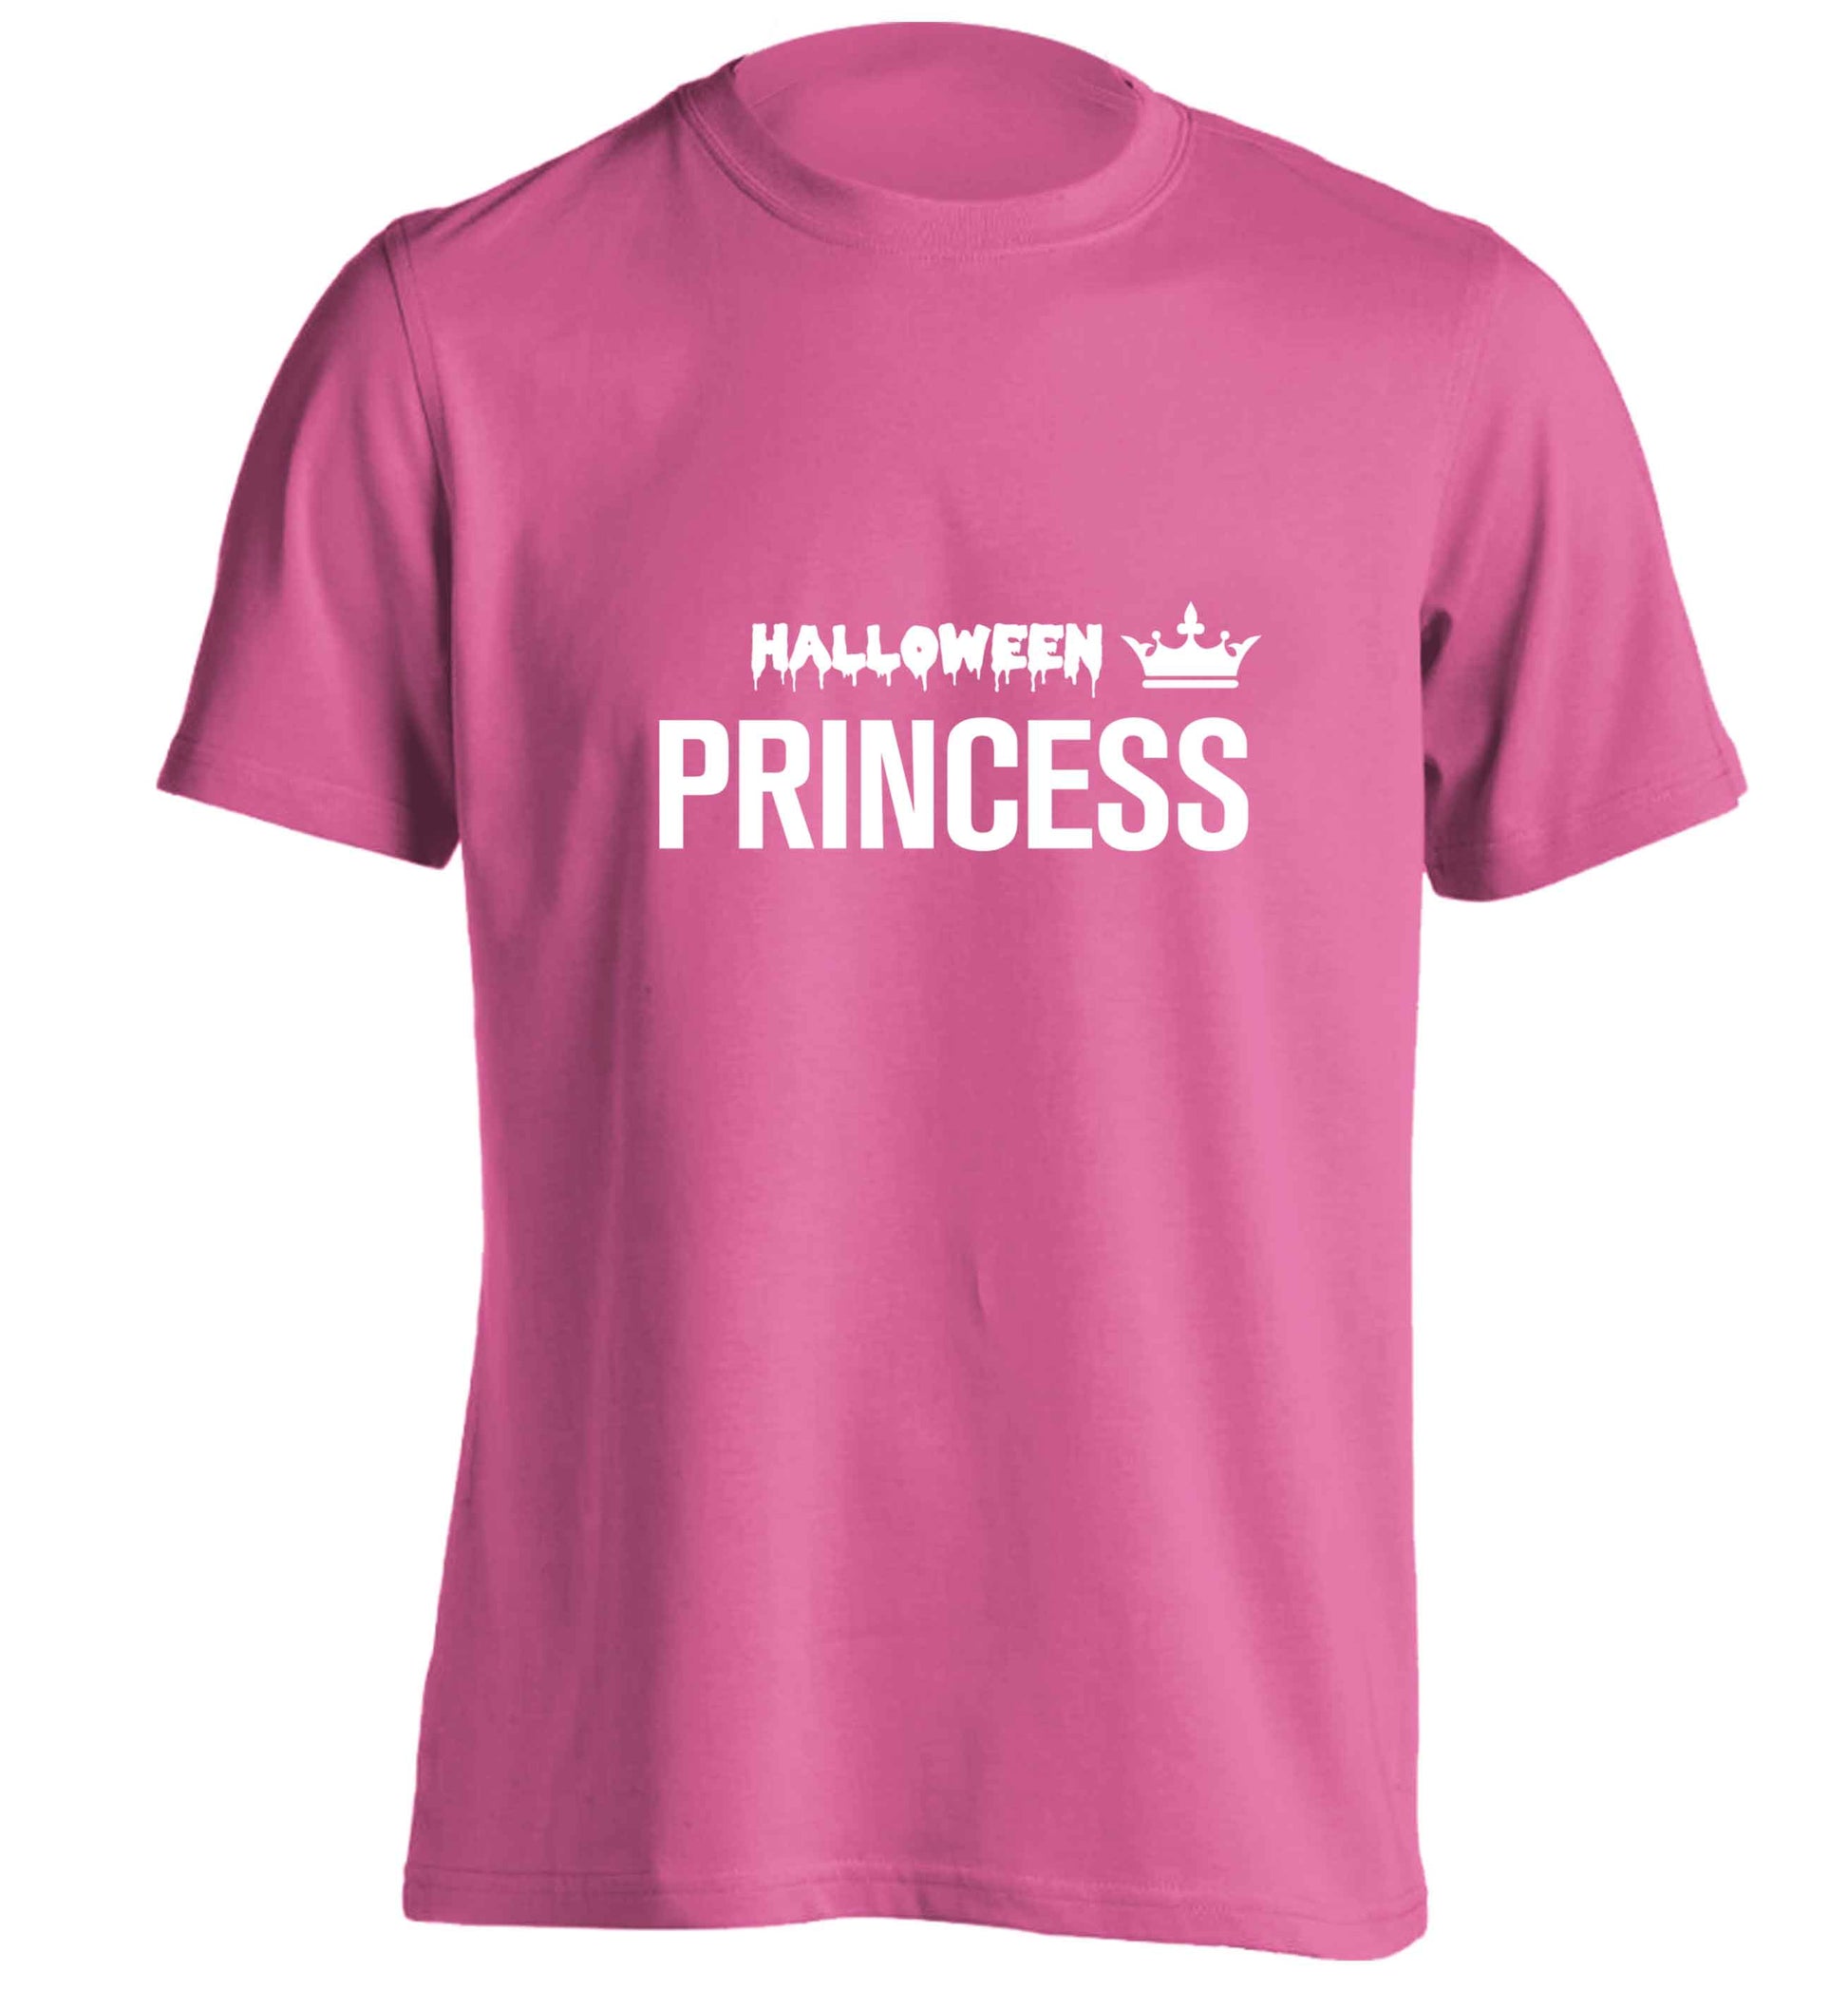 Halloween princess adults unisex pink Tshirt 2XL